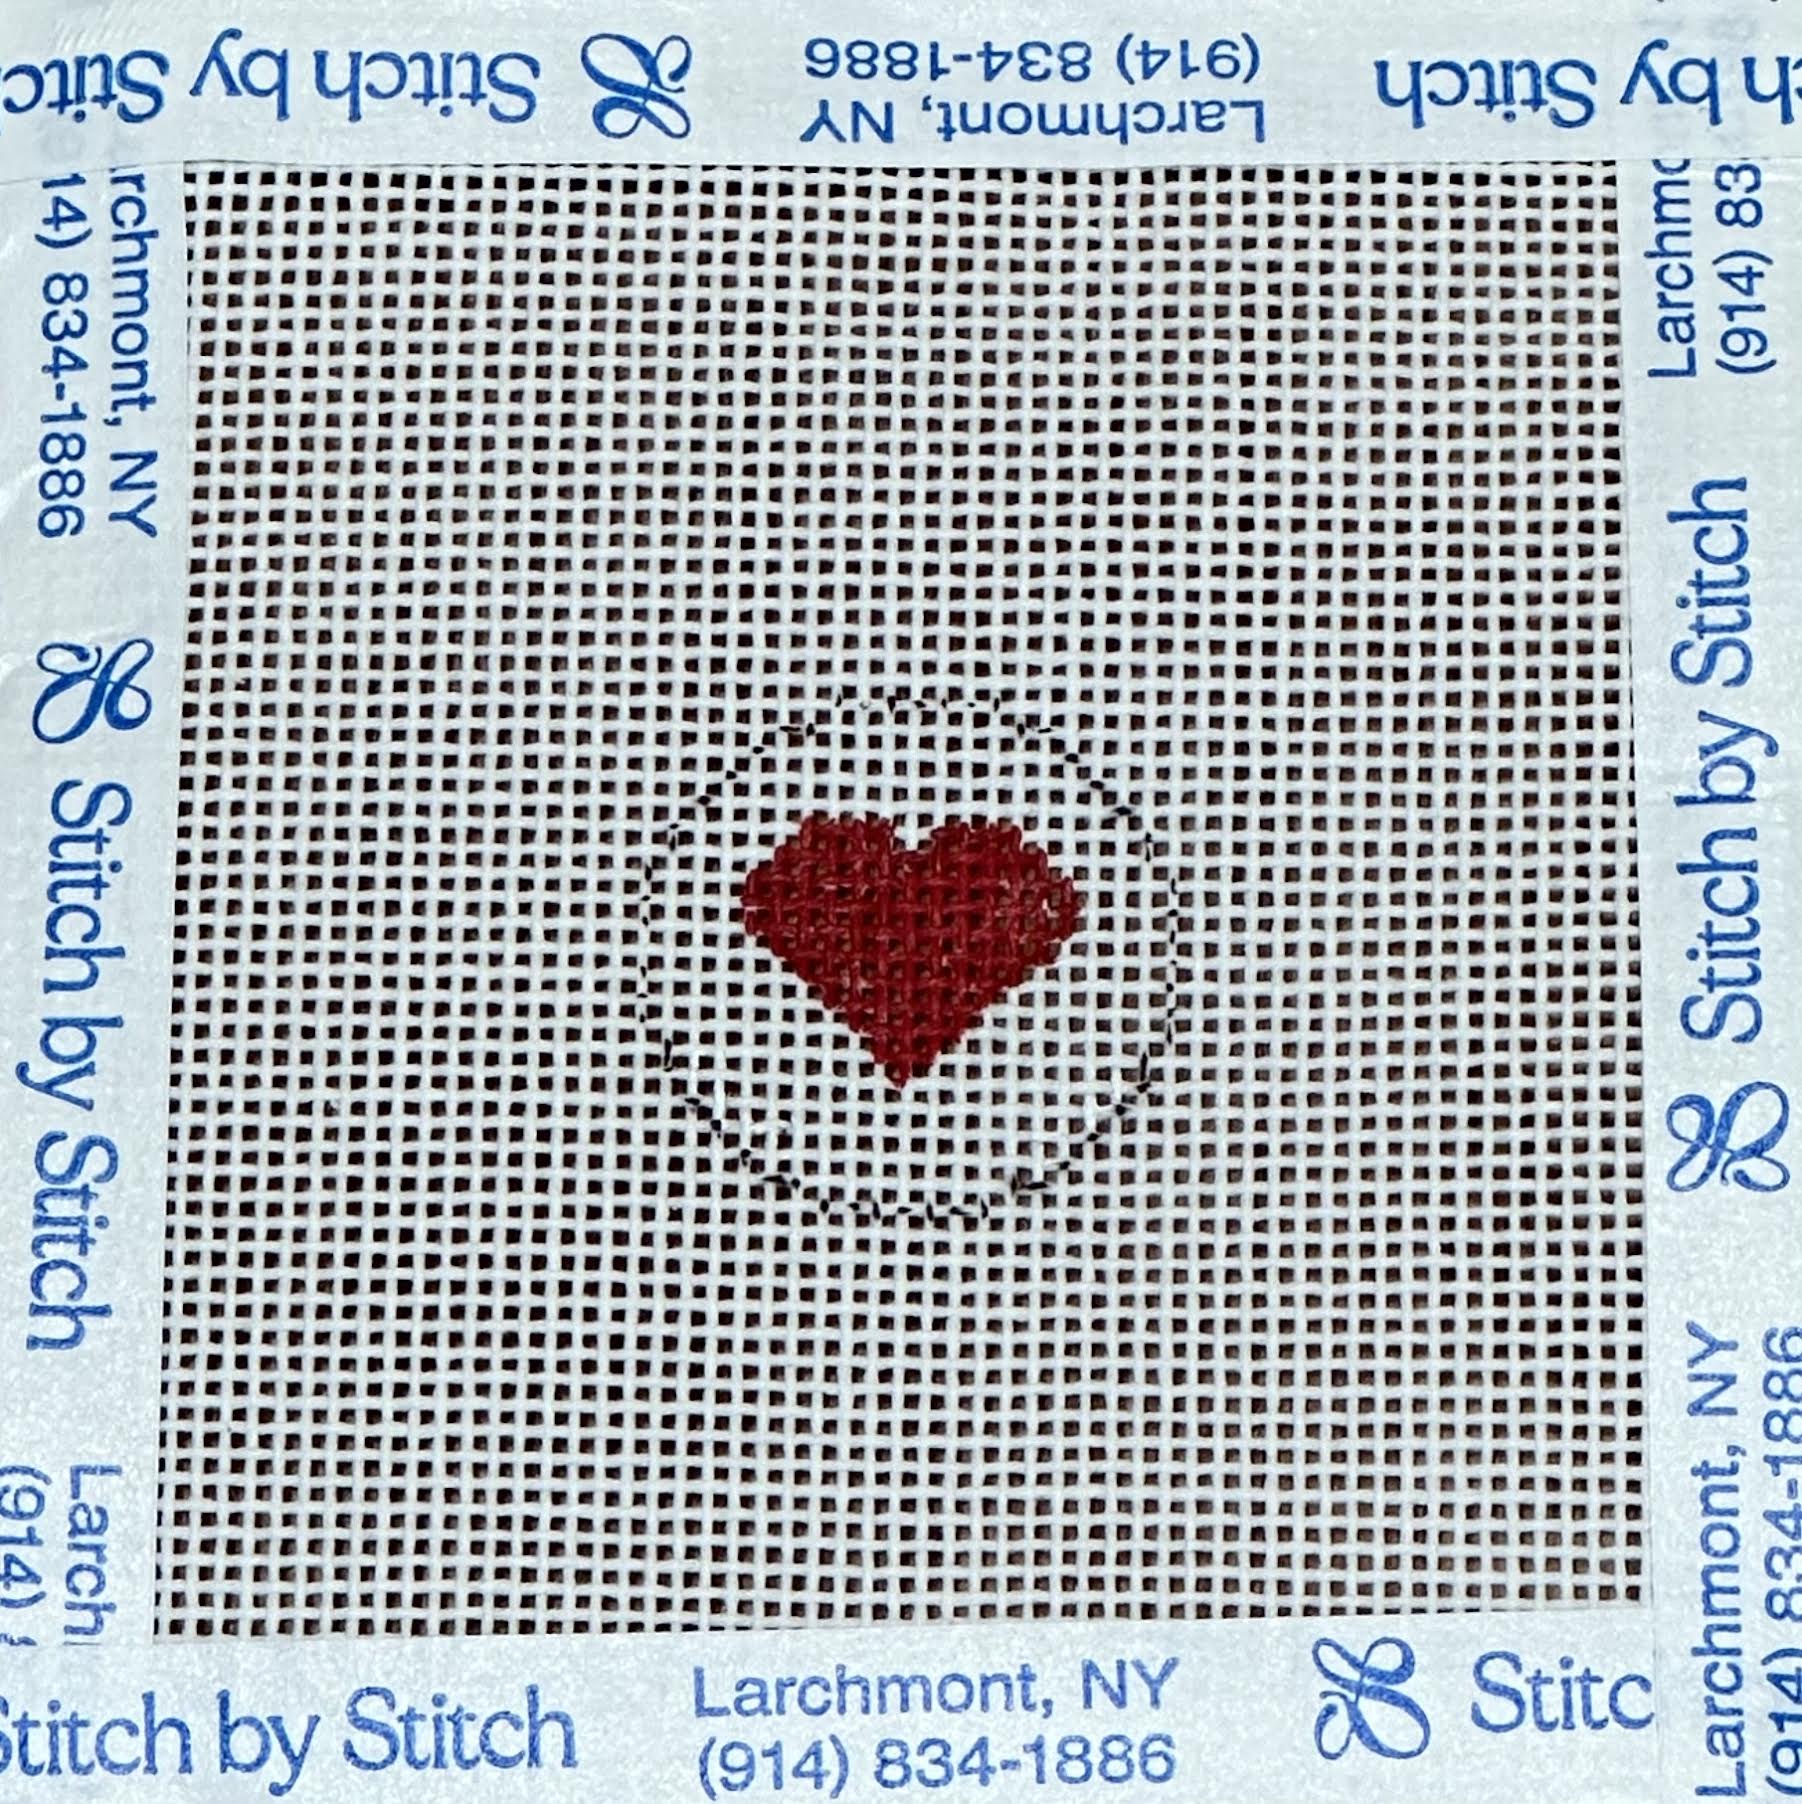 Stitch by Stitch Heart Keyfob insert